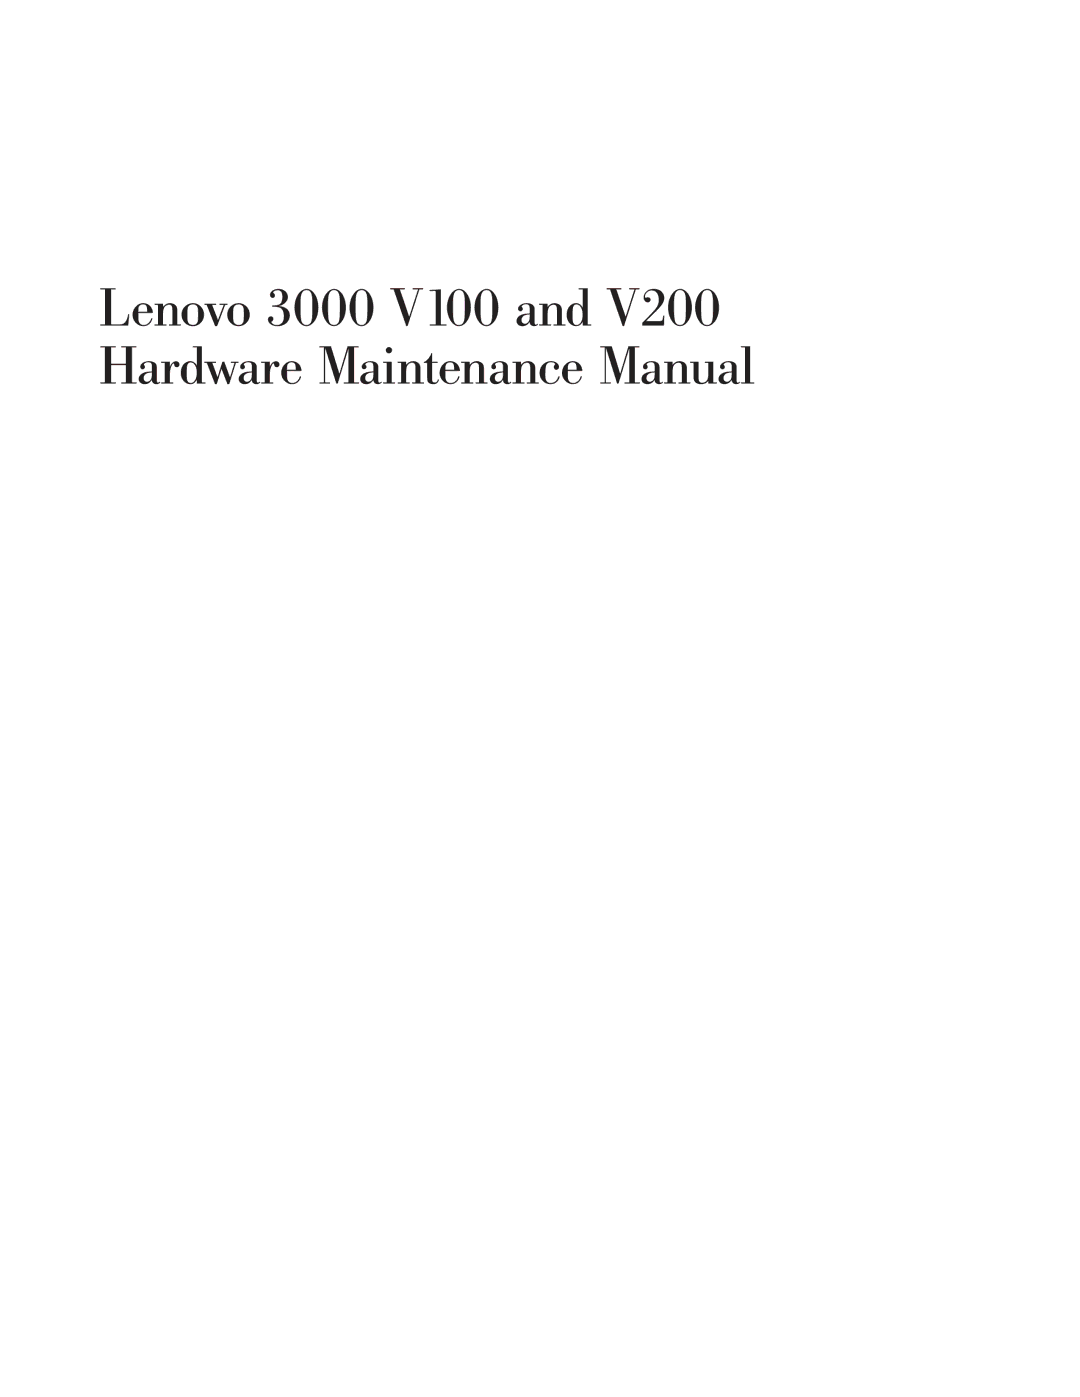 Lenovo manual Lenovo 3000 V100 and V200 Hardware Maintenance Manual 